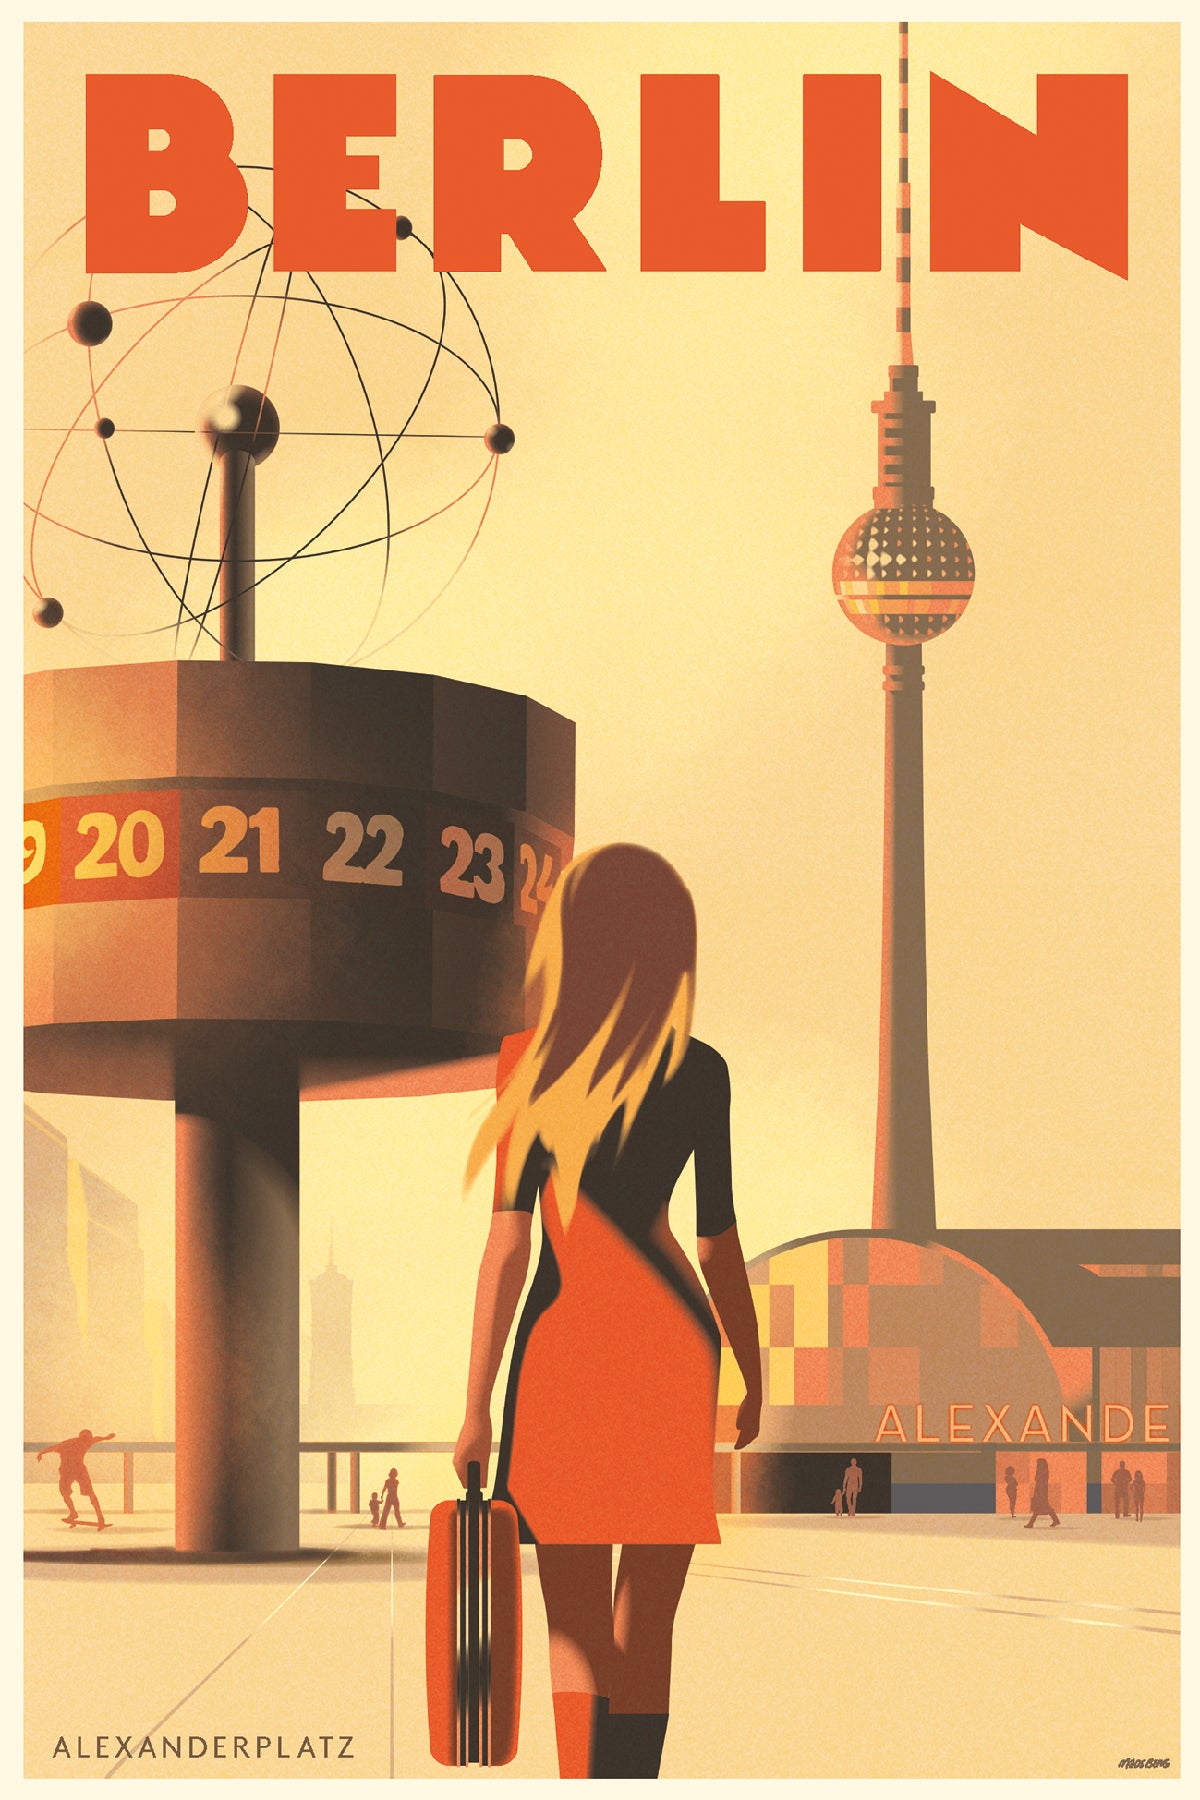 Alexa in Alexanderplatz, Berlin, Germany. [World Clock / Urania-Weltzeituhr & TV Tower]